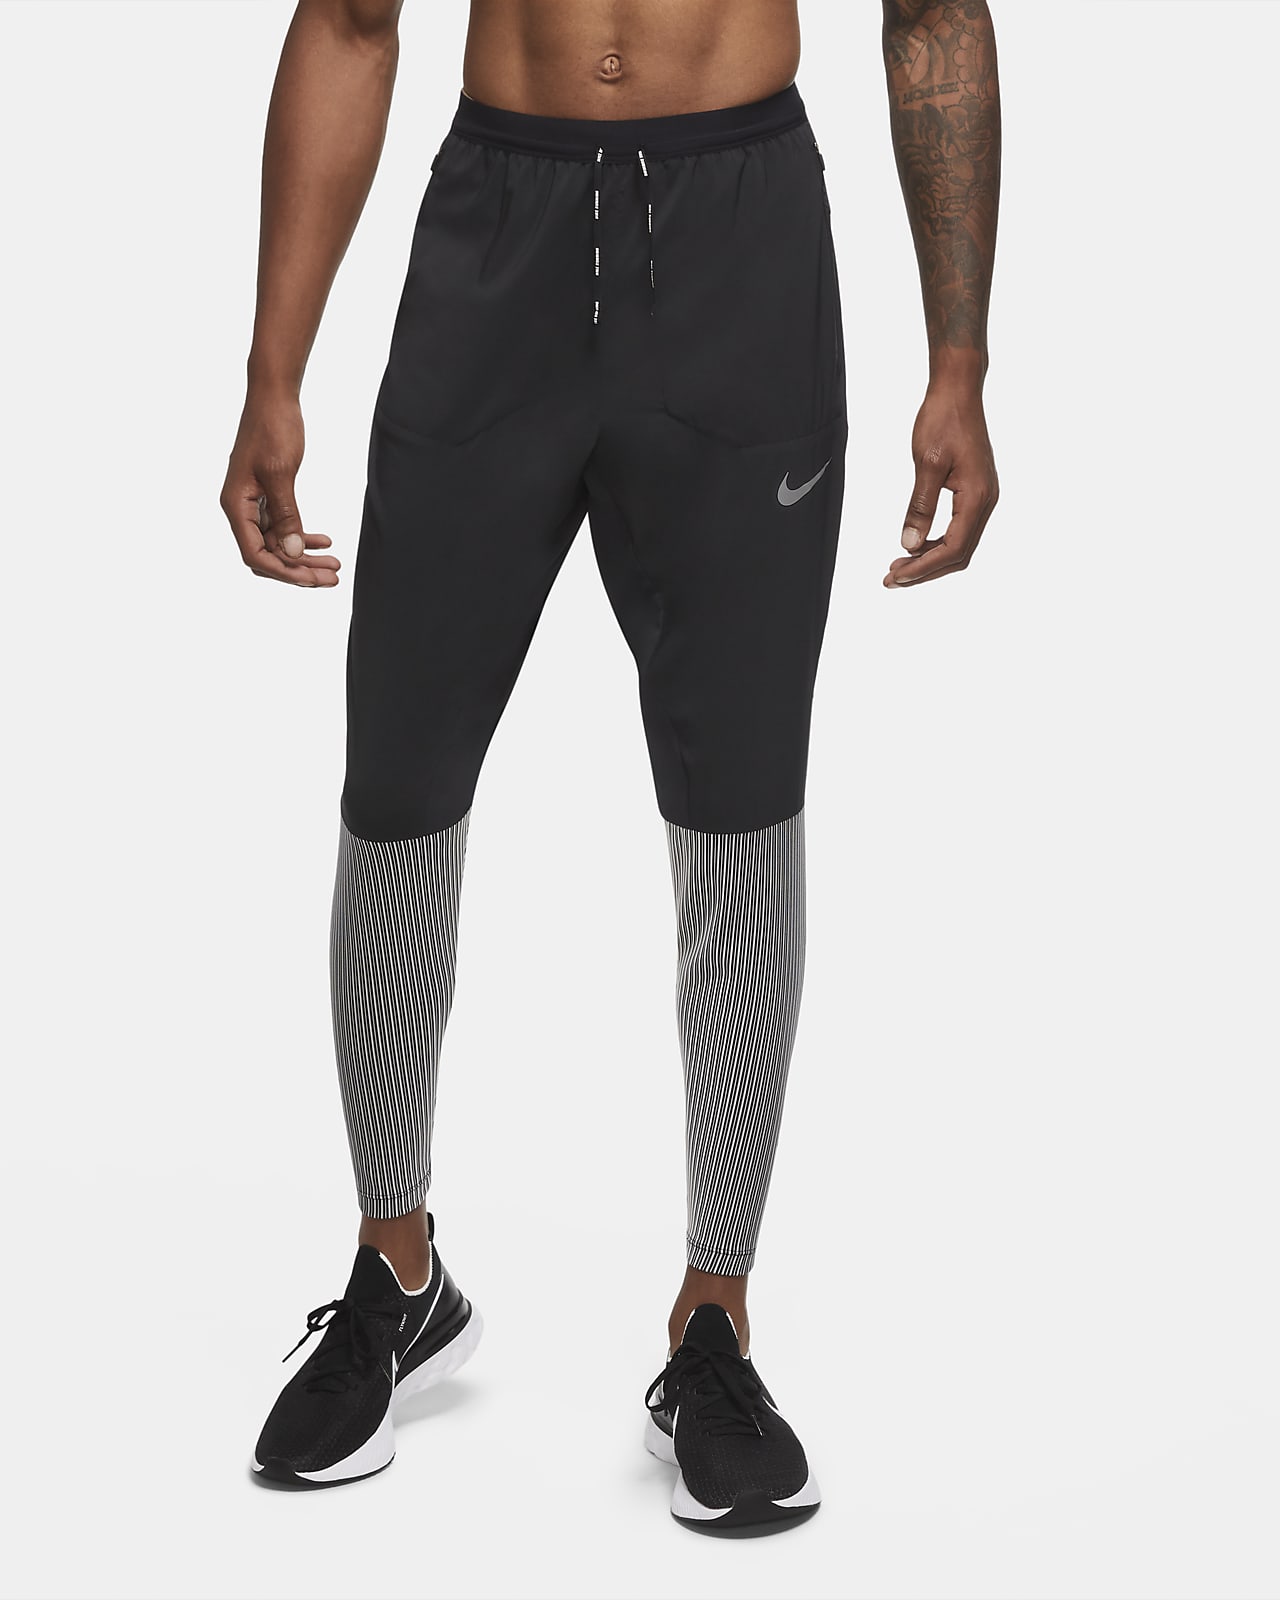 Nike公式 ナイキ フェノム エリート フューチャー ファスト メンズ ハイブリッド ランニングパンツ オンラインストア 通販サイト